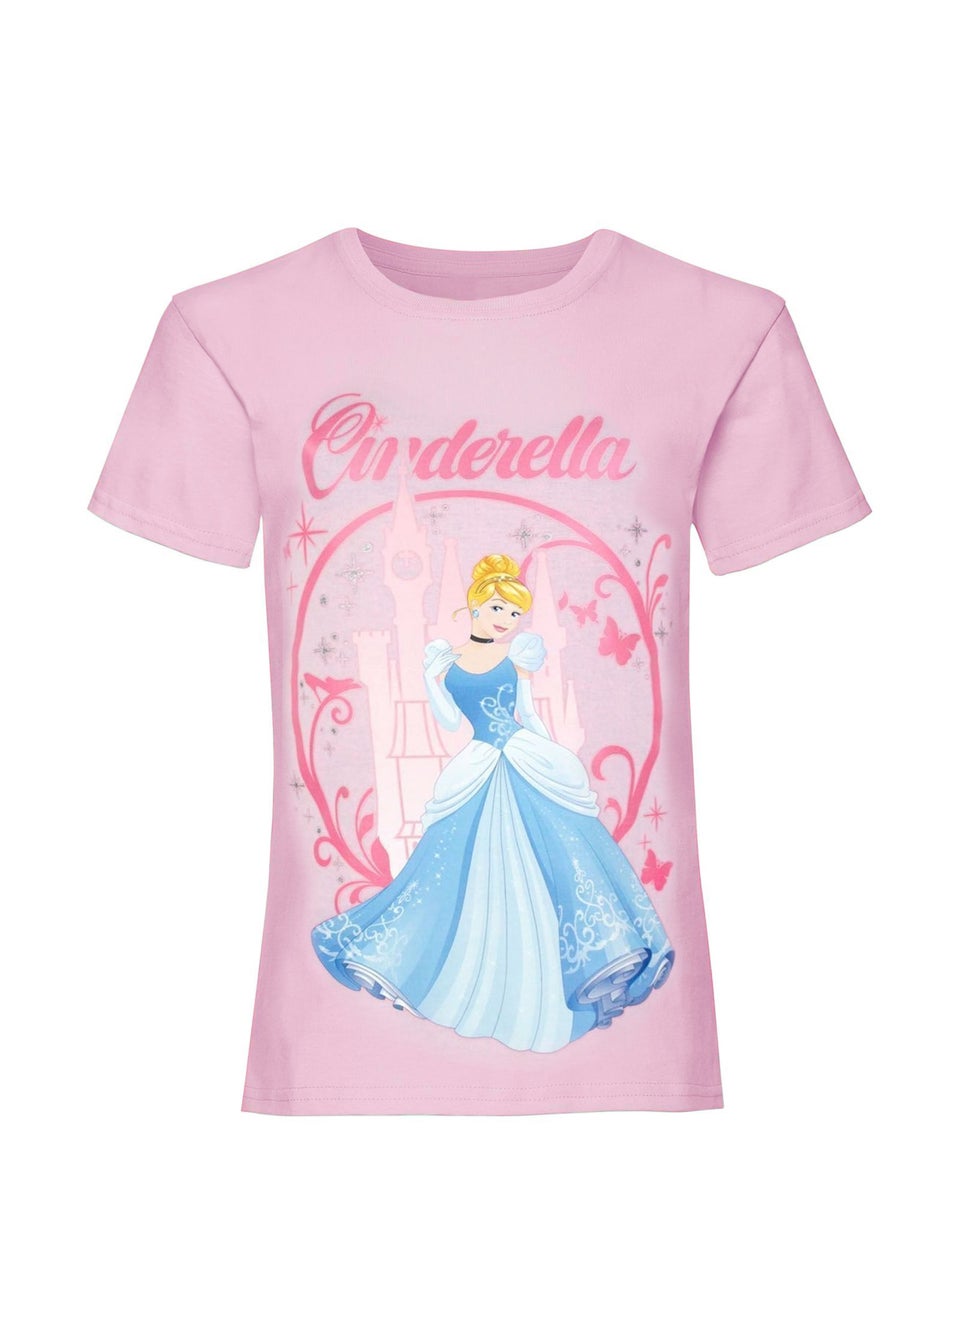 Cinderella Kids Pink T-Shirt (12 months-3 yrs)